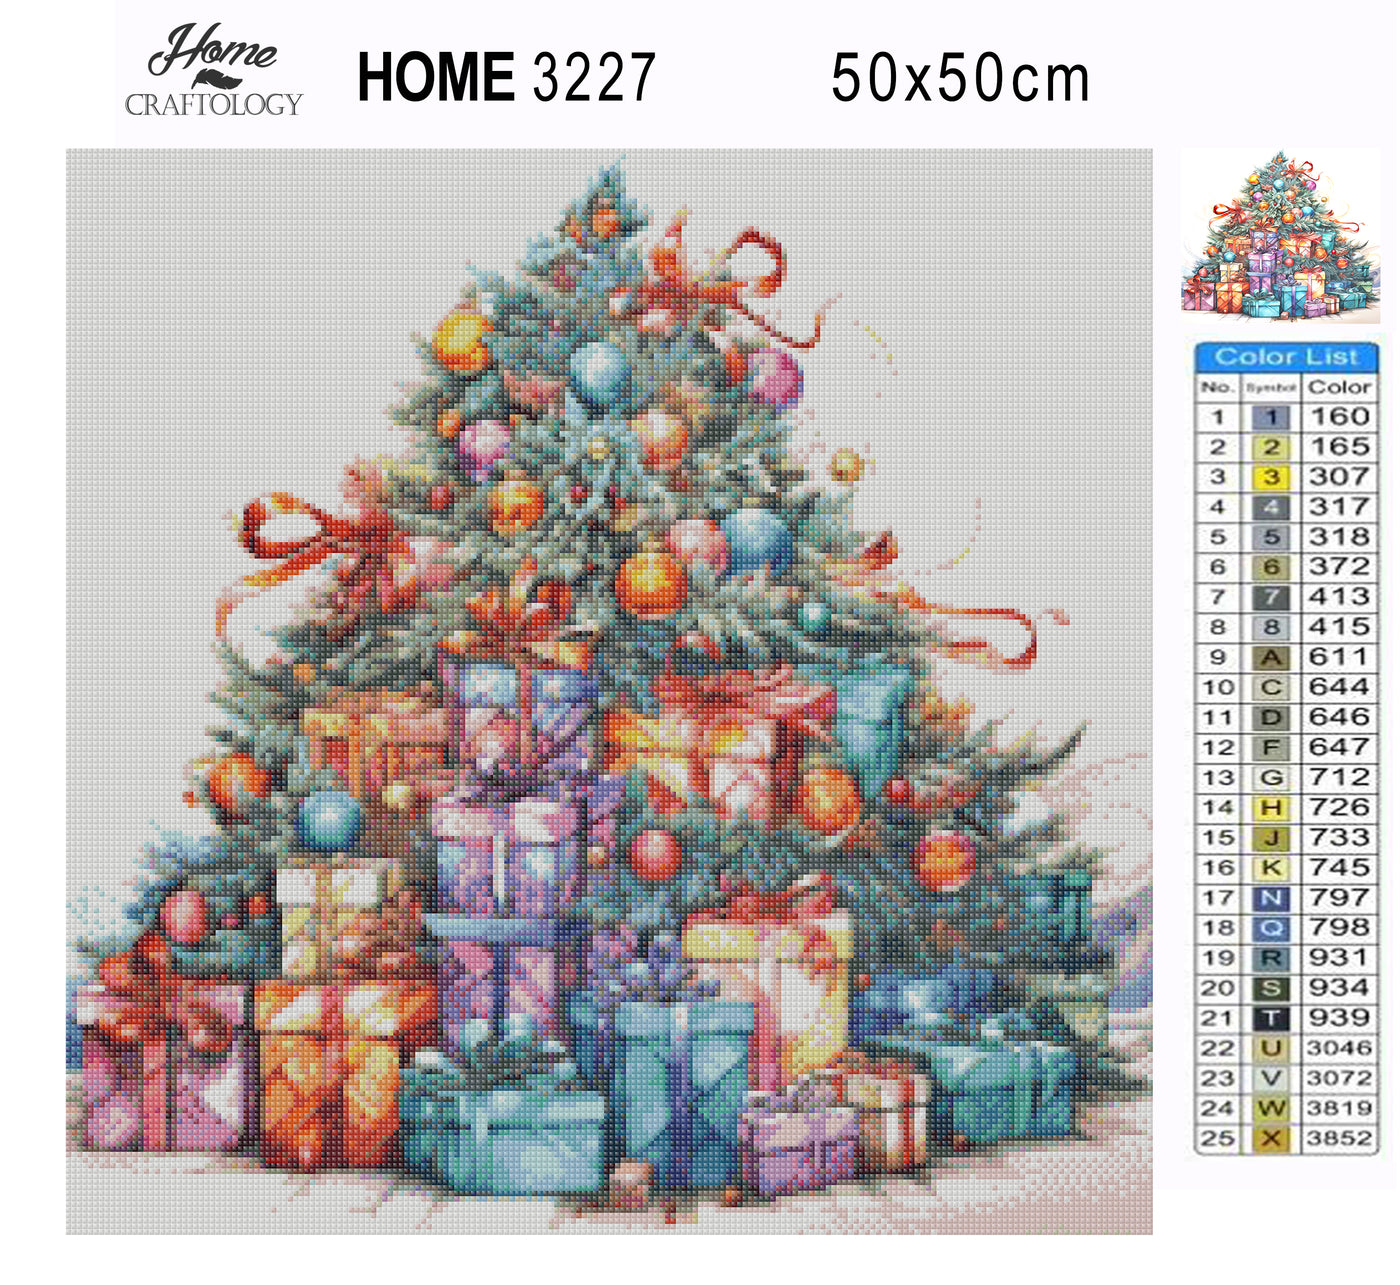 Christmas Tree with Lots of Gifts - Premium Diamond Painting Kit